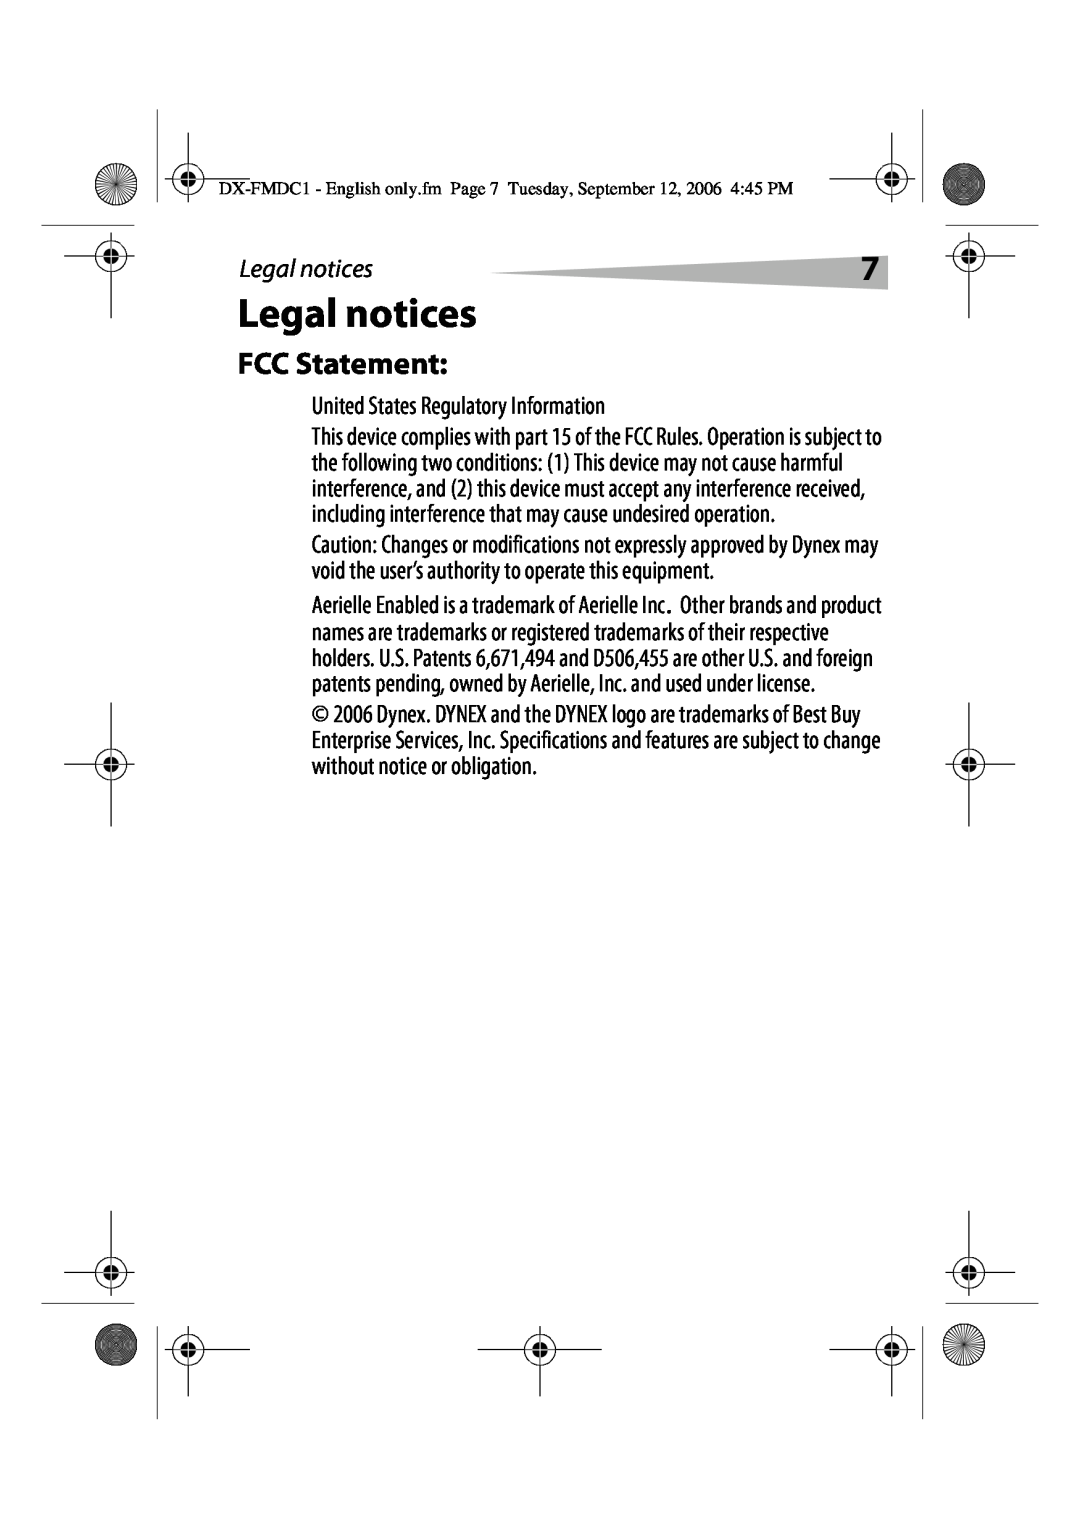 Dynex DX-FMDC1 manual Legal notices, FCC Statement 